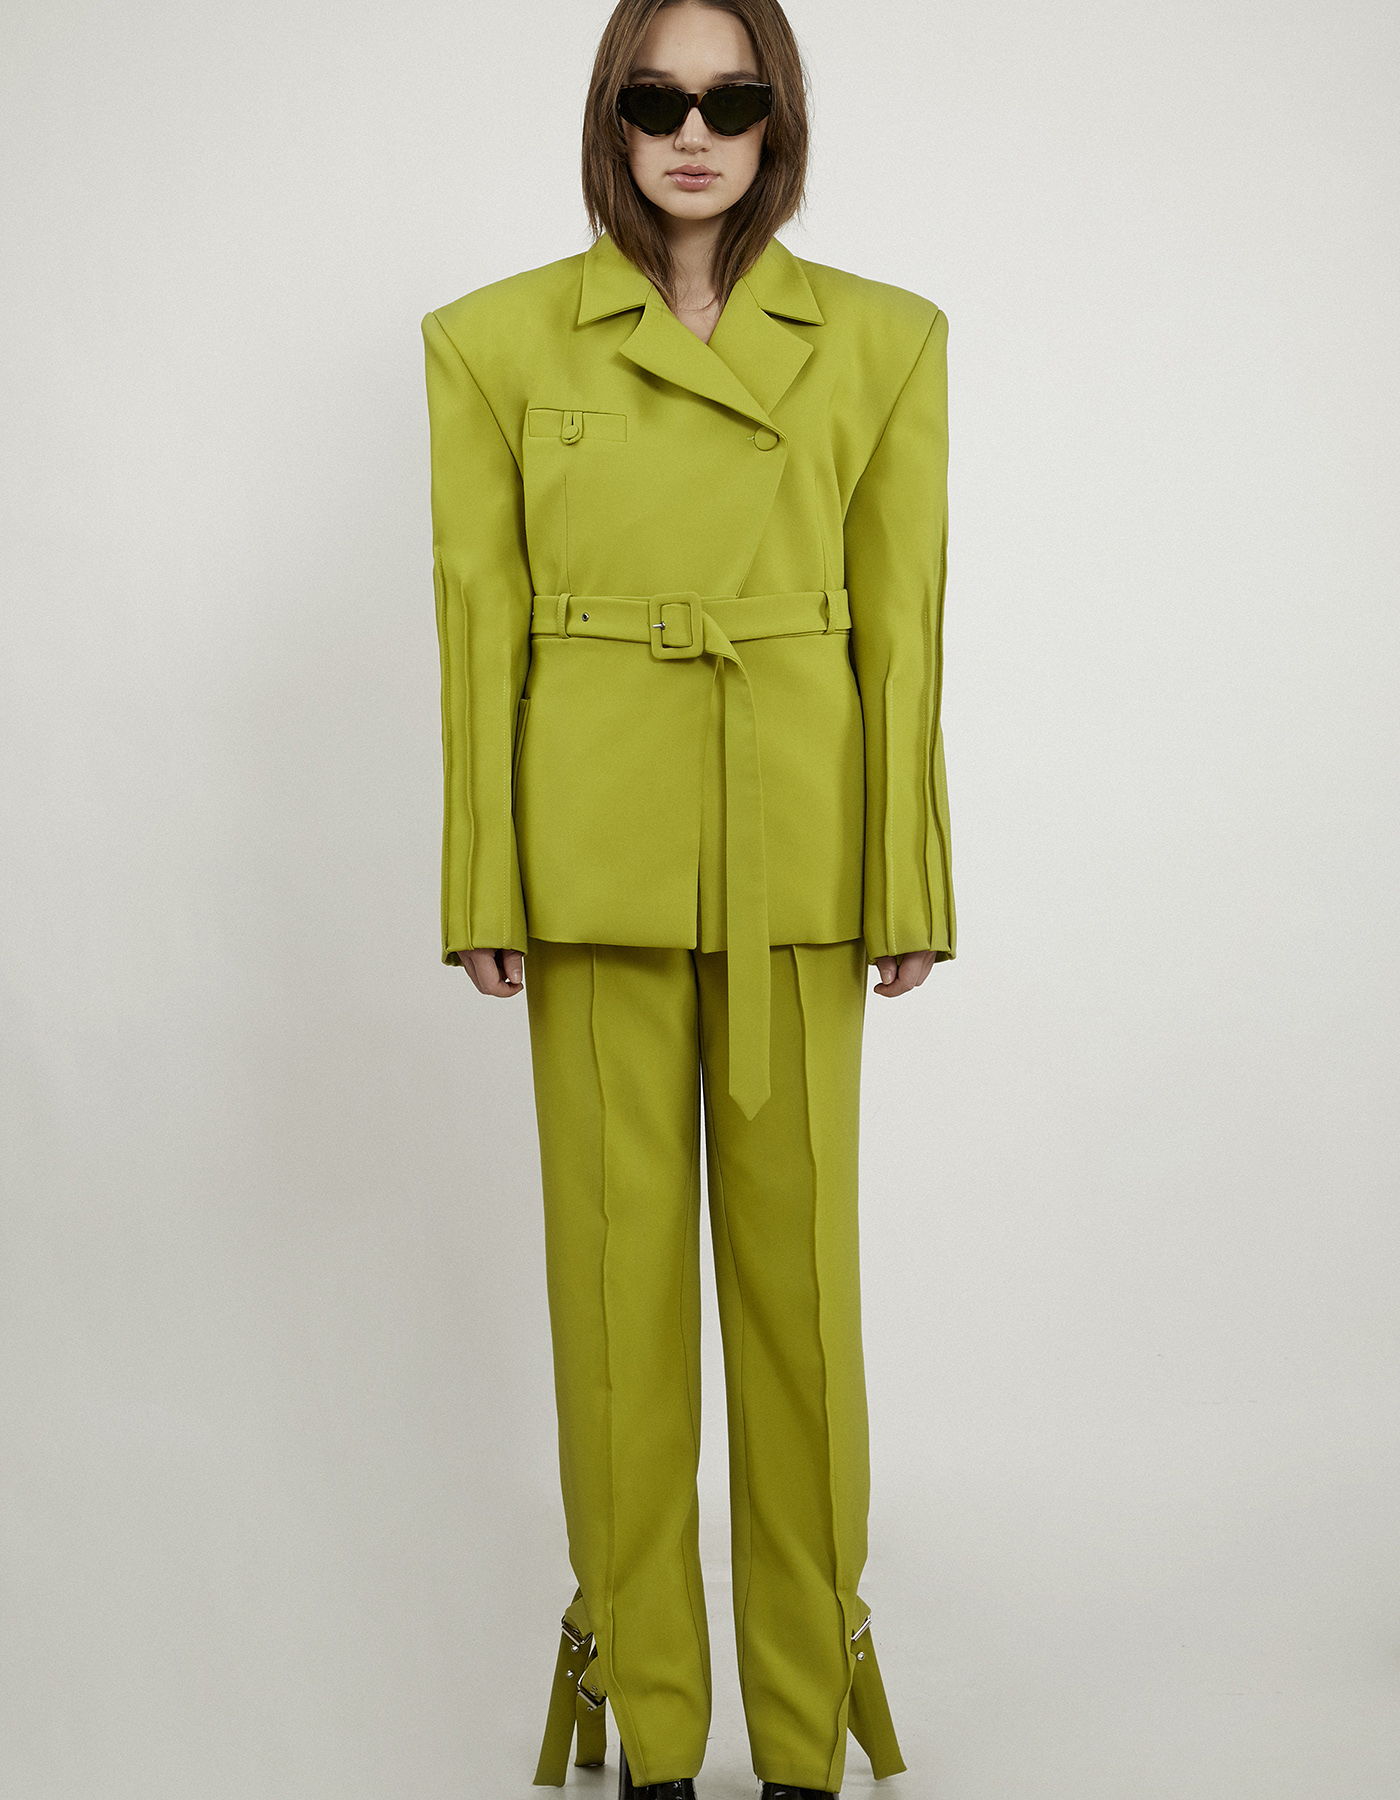 Chartreuse green blazer